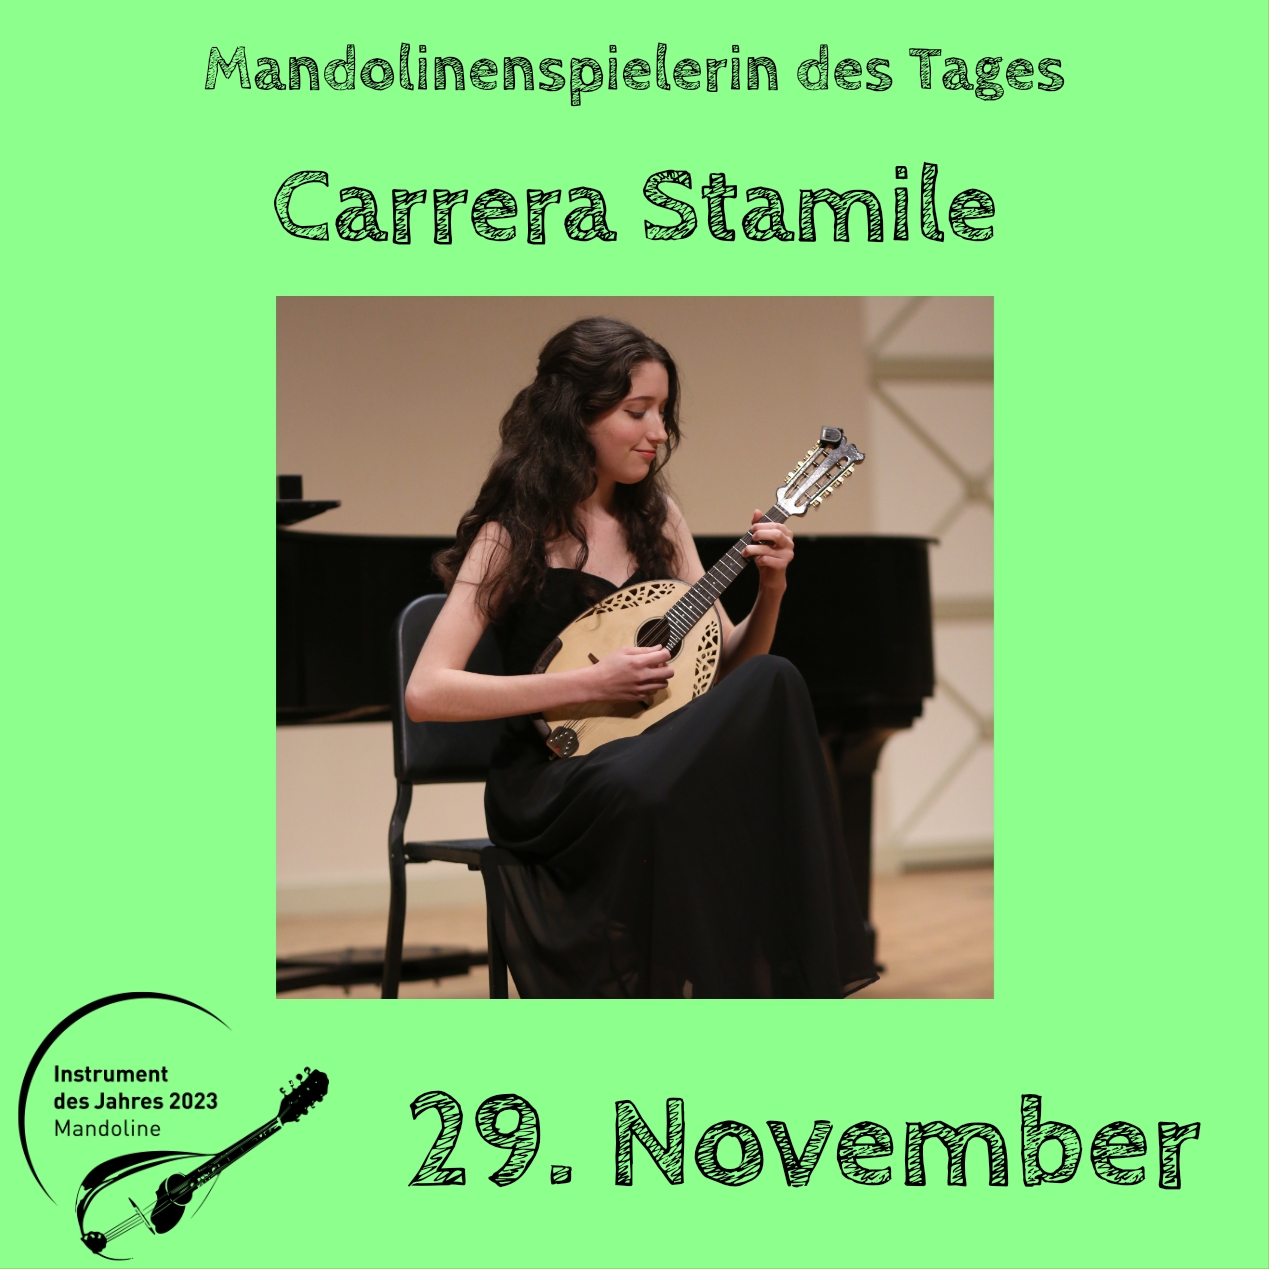 29. November - Carrera Stamile Instrument des Jahres 2023 Mandolinenspieler Mandolinenspielerin des Tages